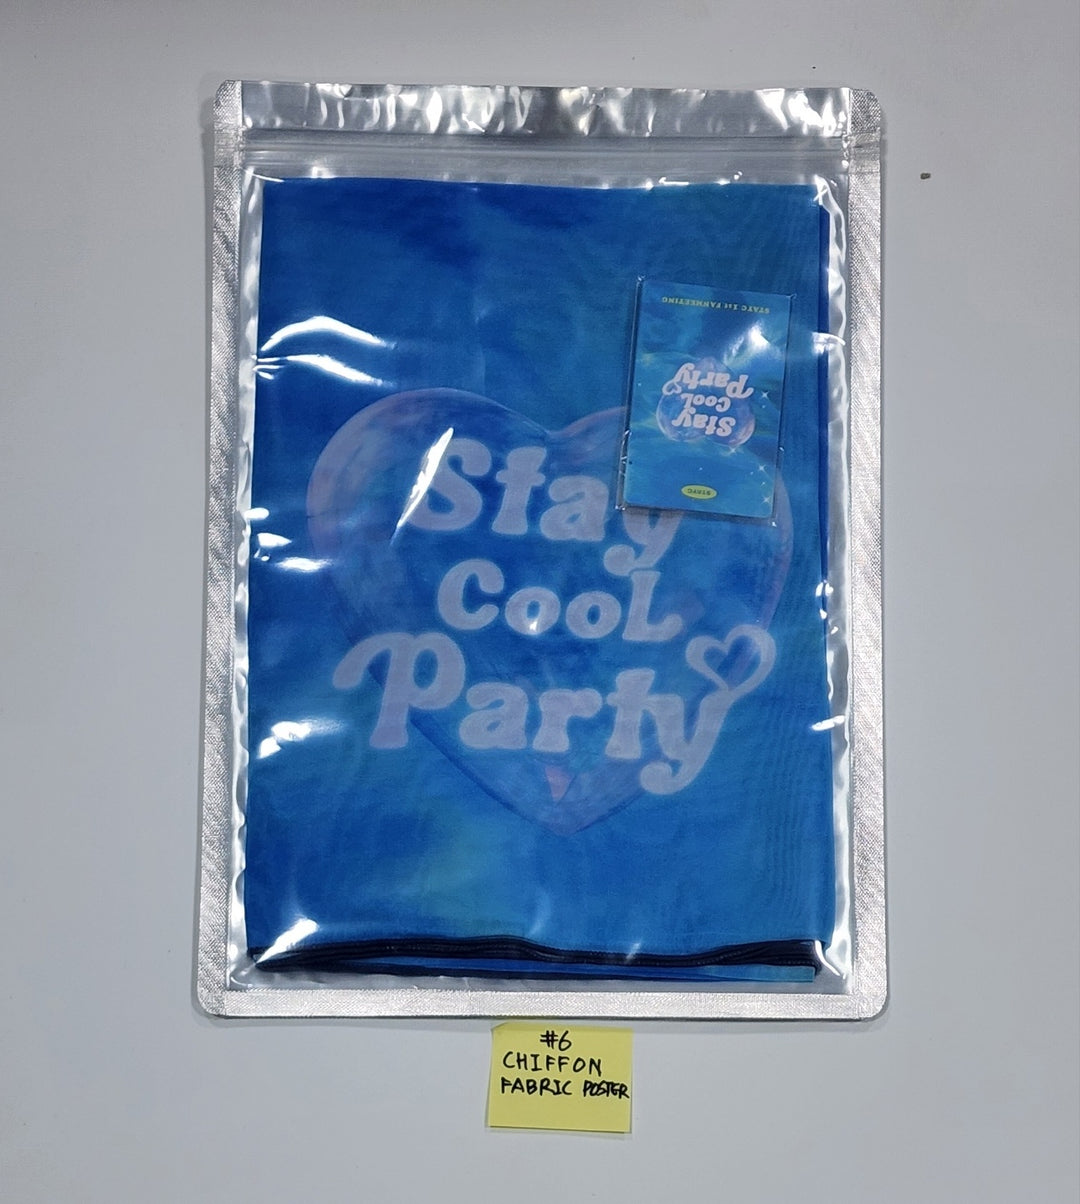 STAYC「Stay Cool party」オフィシャルMD（we need loveバッジ、シフォン生地ポスター、カードホルダーキーホルダー、Stay Cool Partyバッジ、TYVEK ECO BAG、プロフィール＆IDカードセット） 